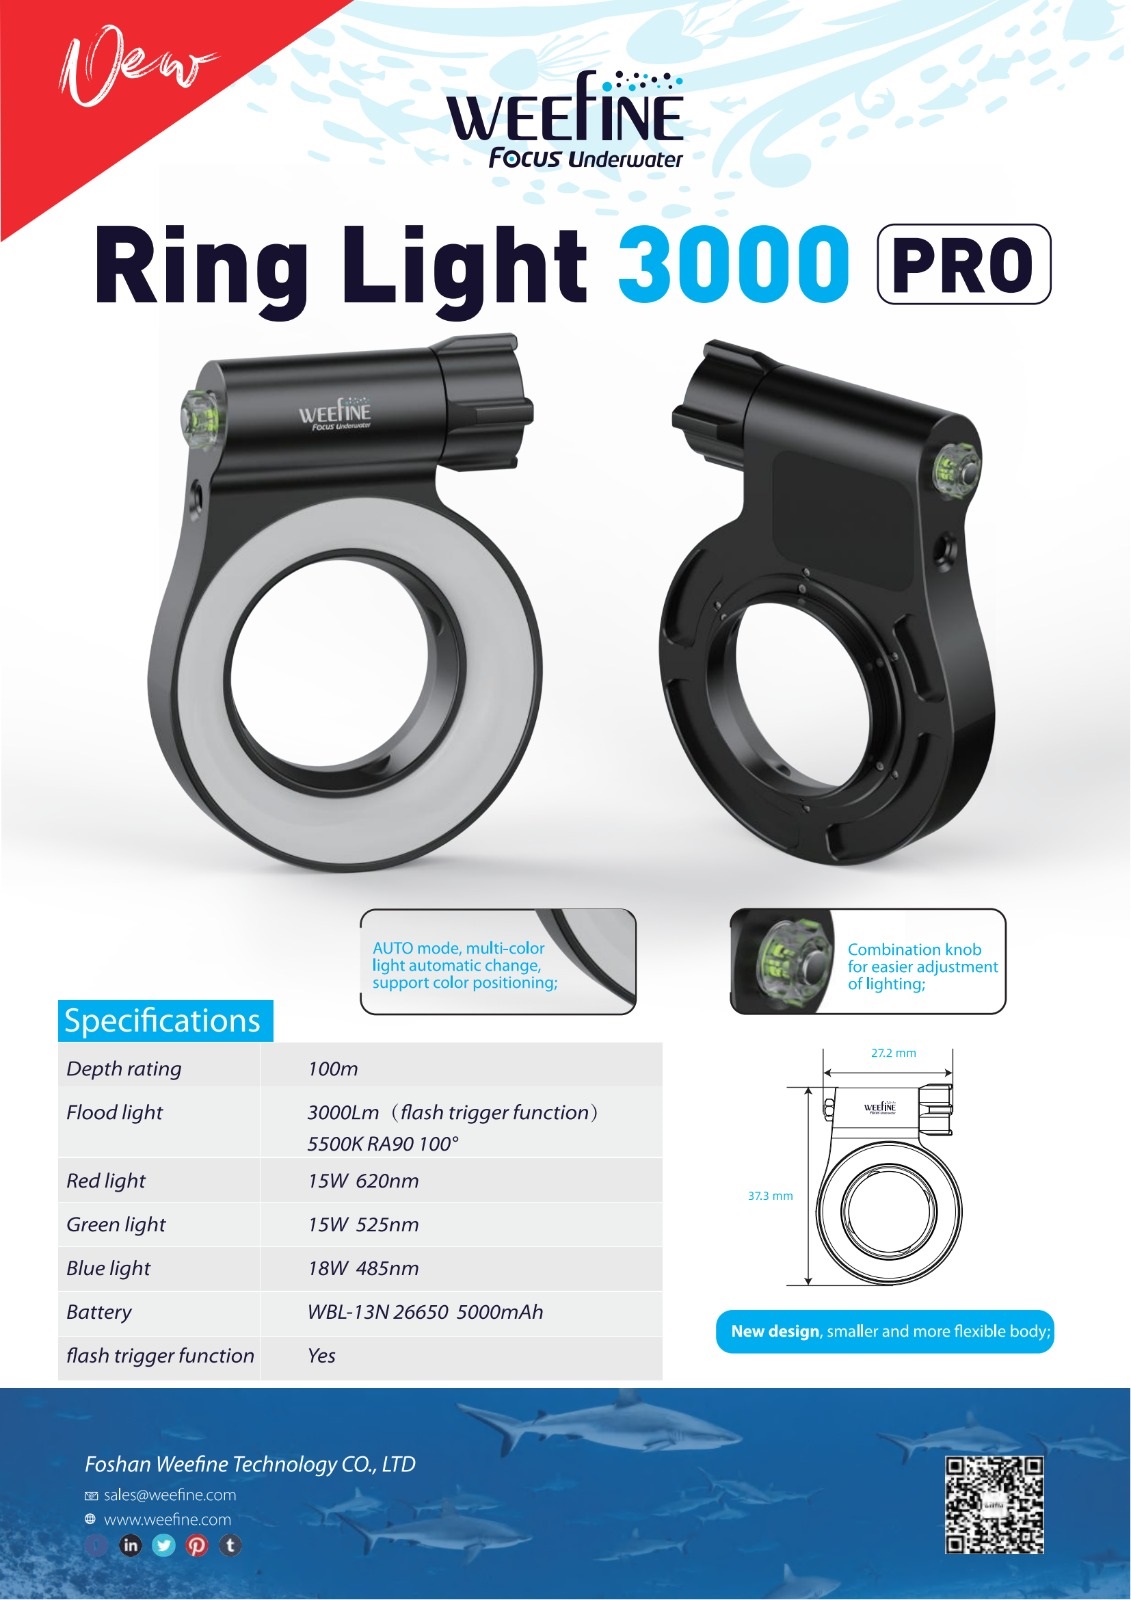 Ringlicht 3000 Pro